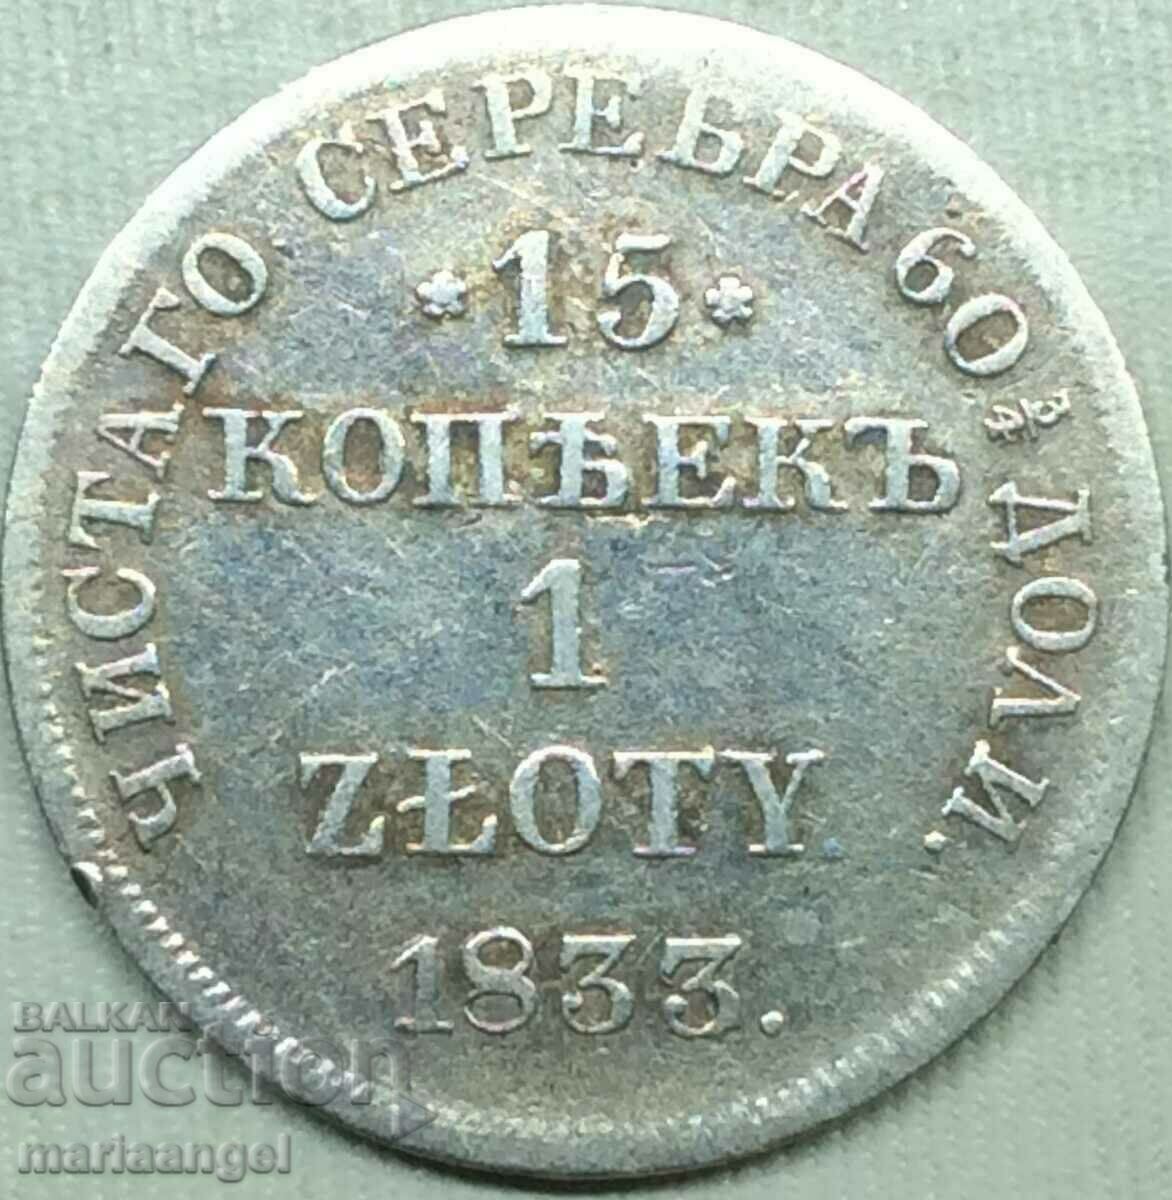 15 kopecks 1 zloty 1833 Poland Nicholas I (1825-55) Tsar of Russia